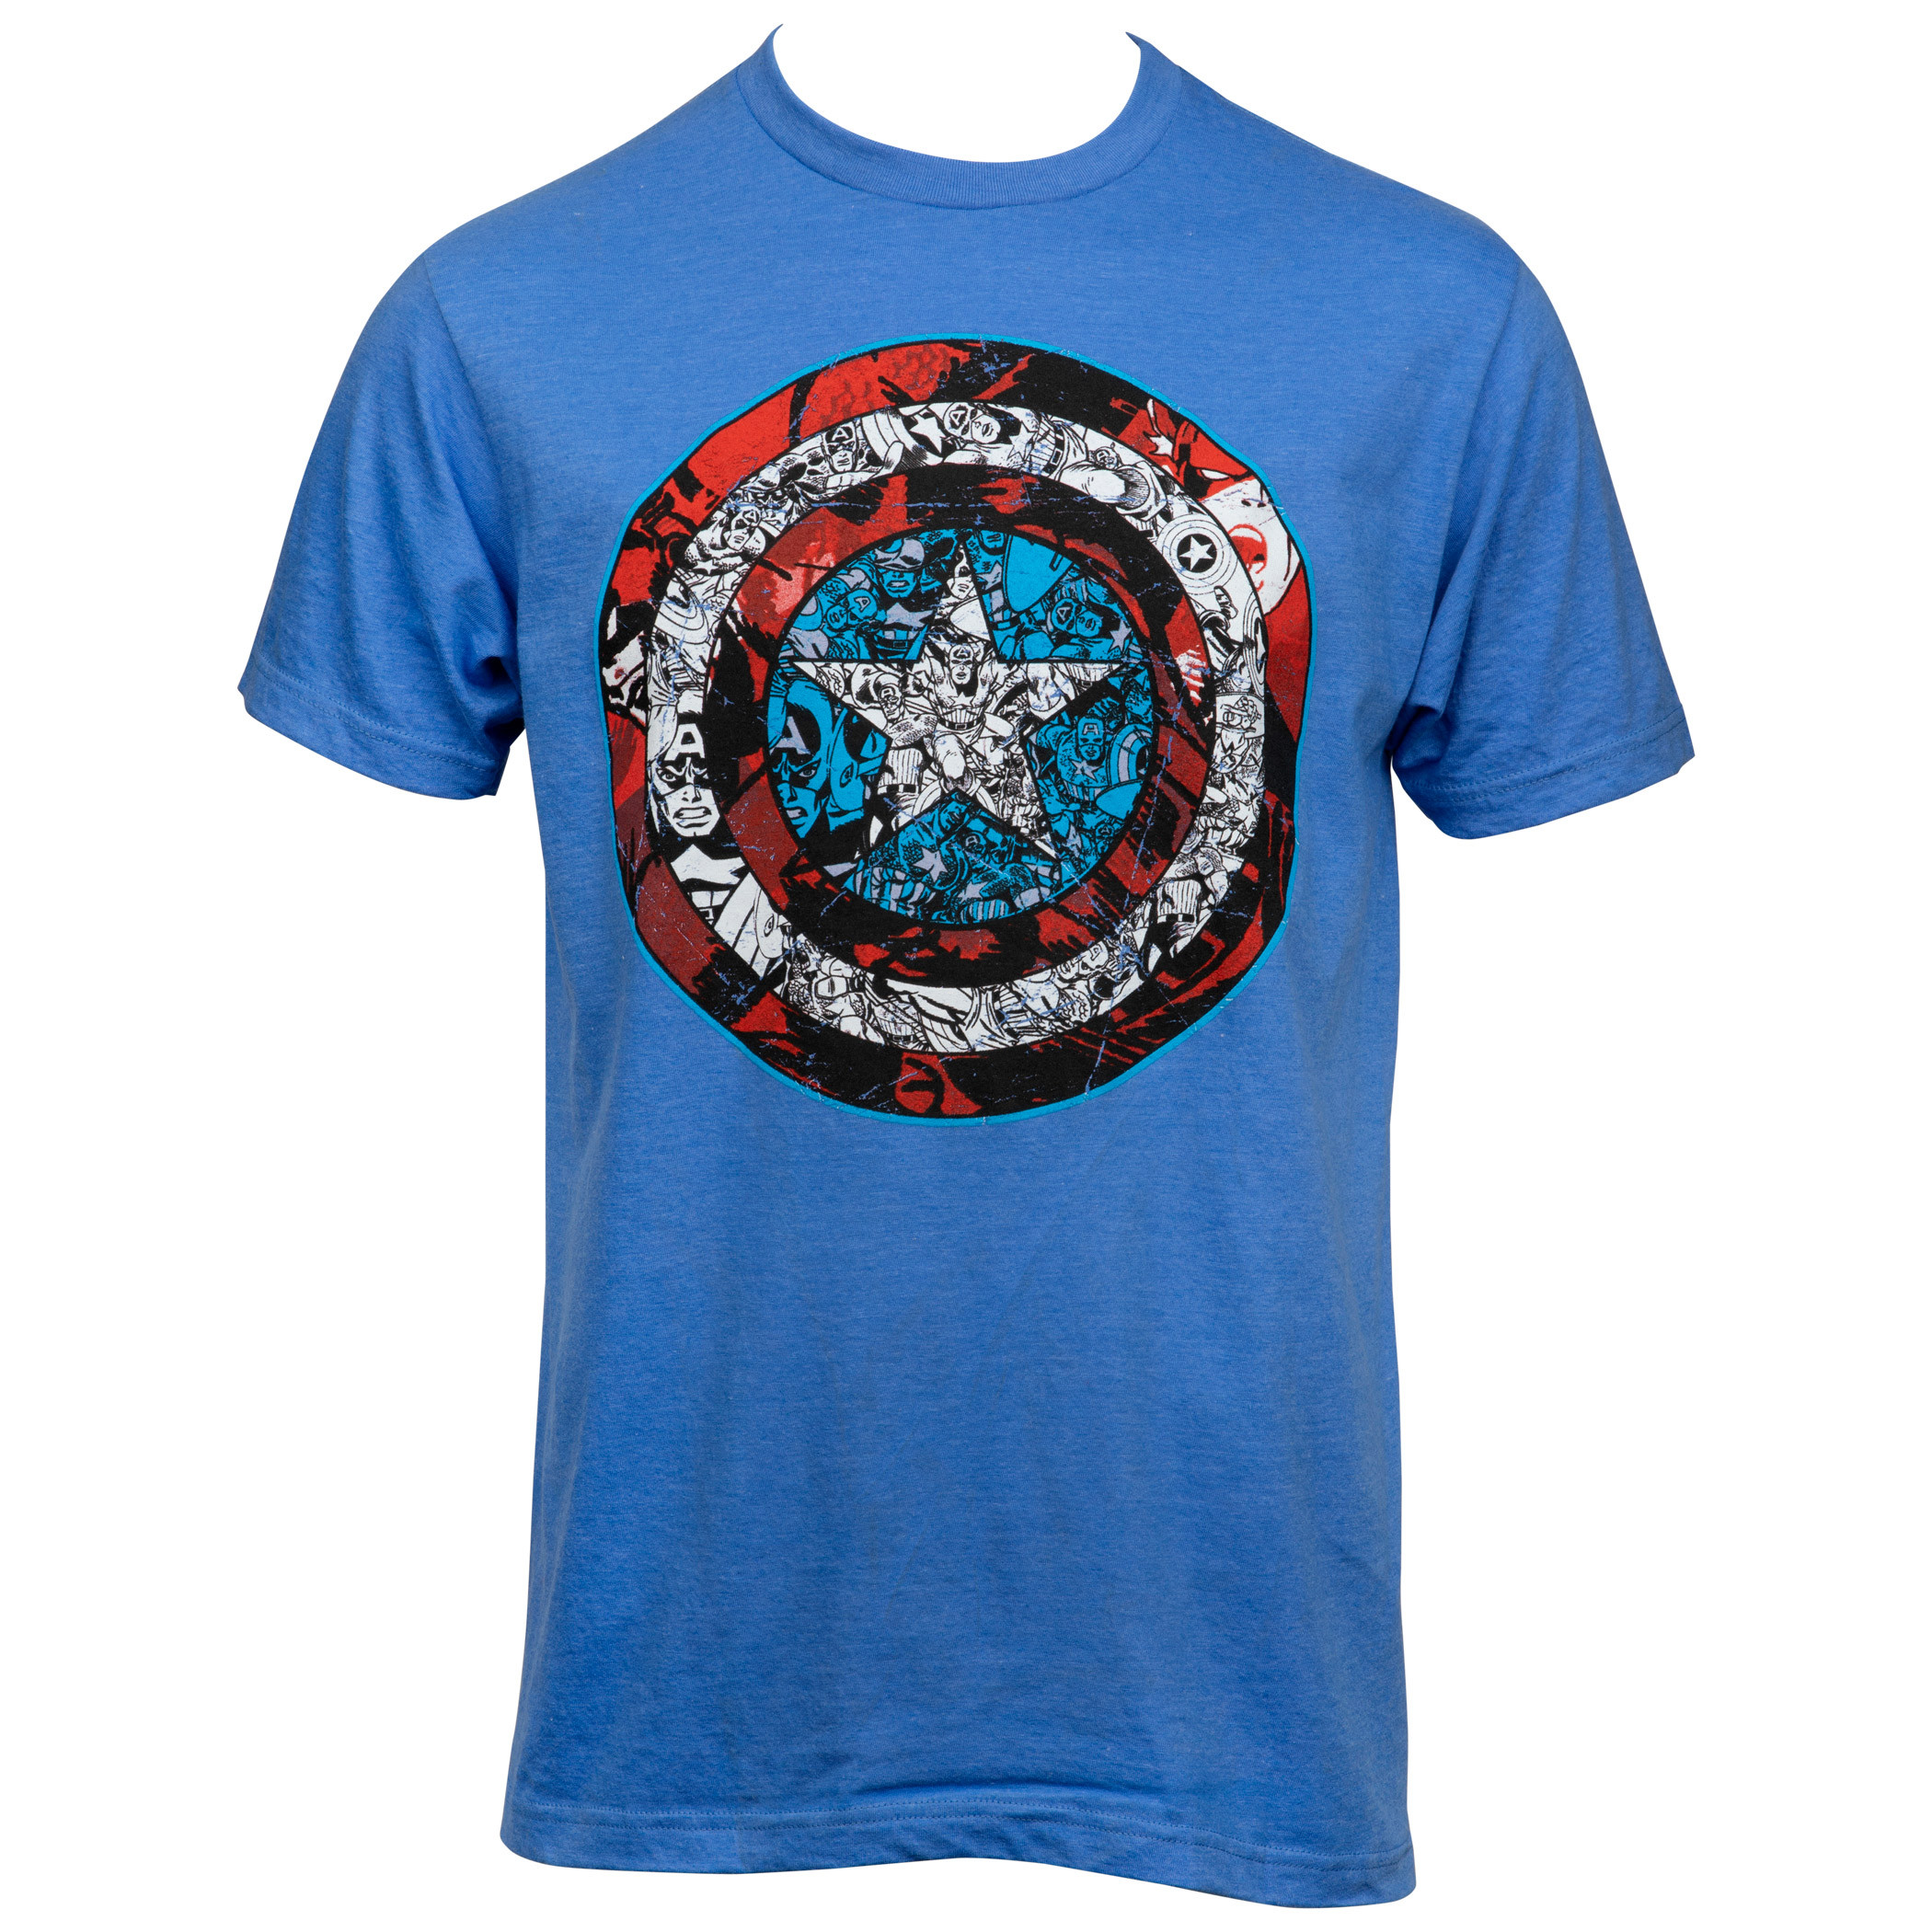 Captain America Shield Comic Images T-shirt